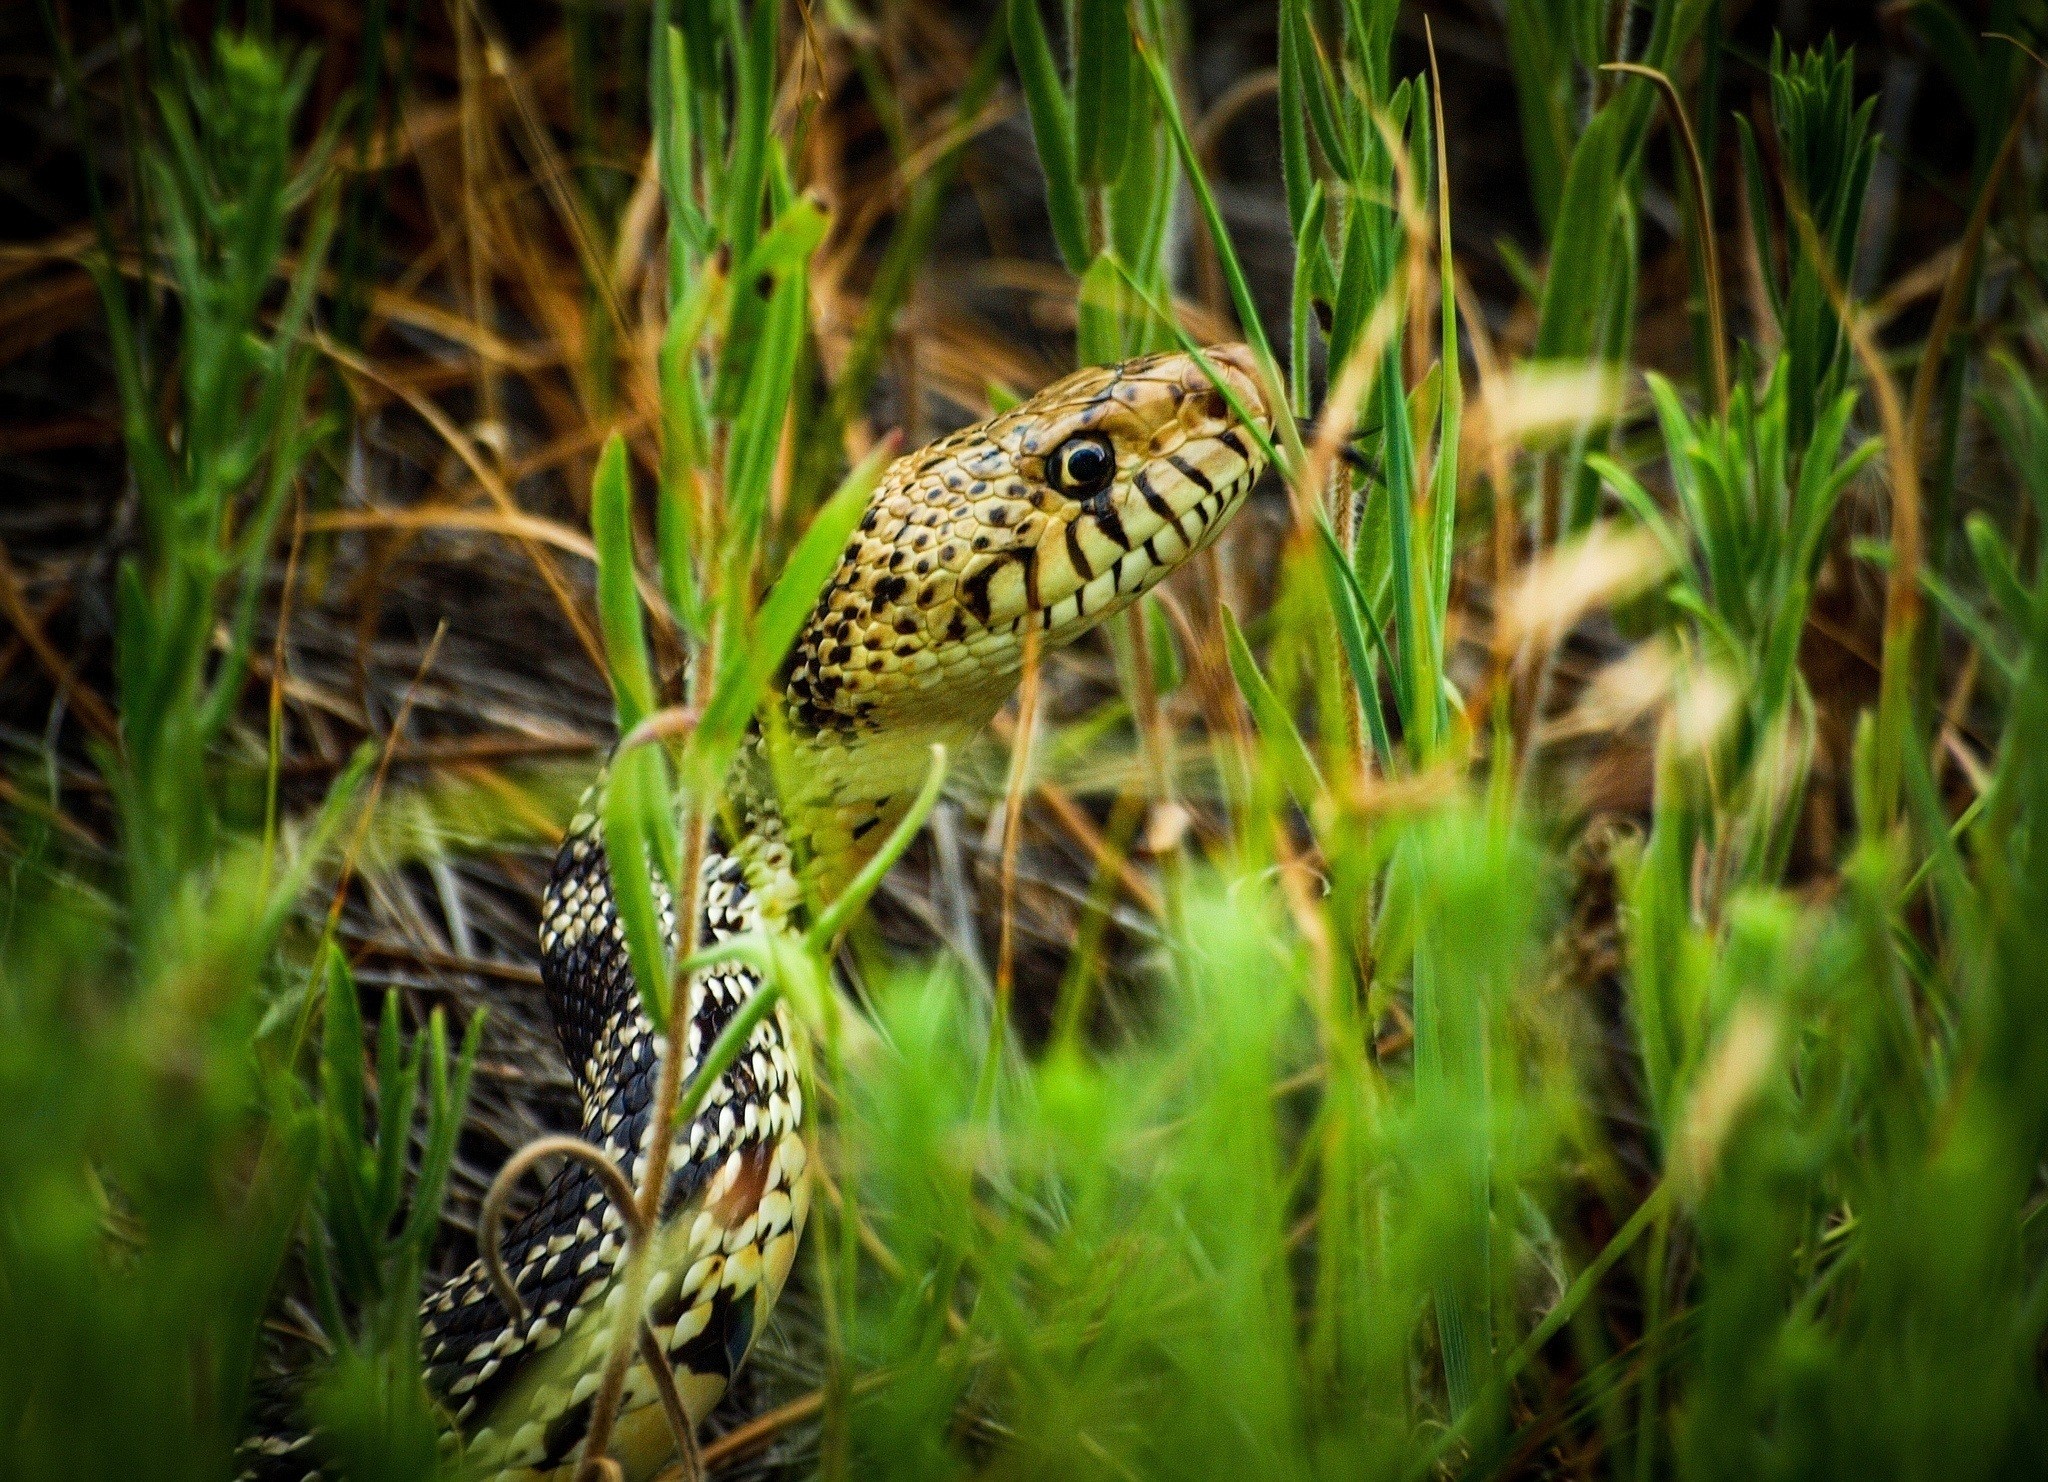 General 2048x1482 grass snake reptiles animals camouflage macro closeup